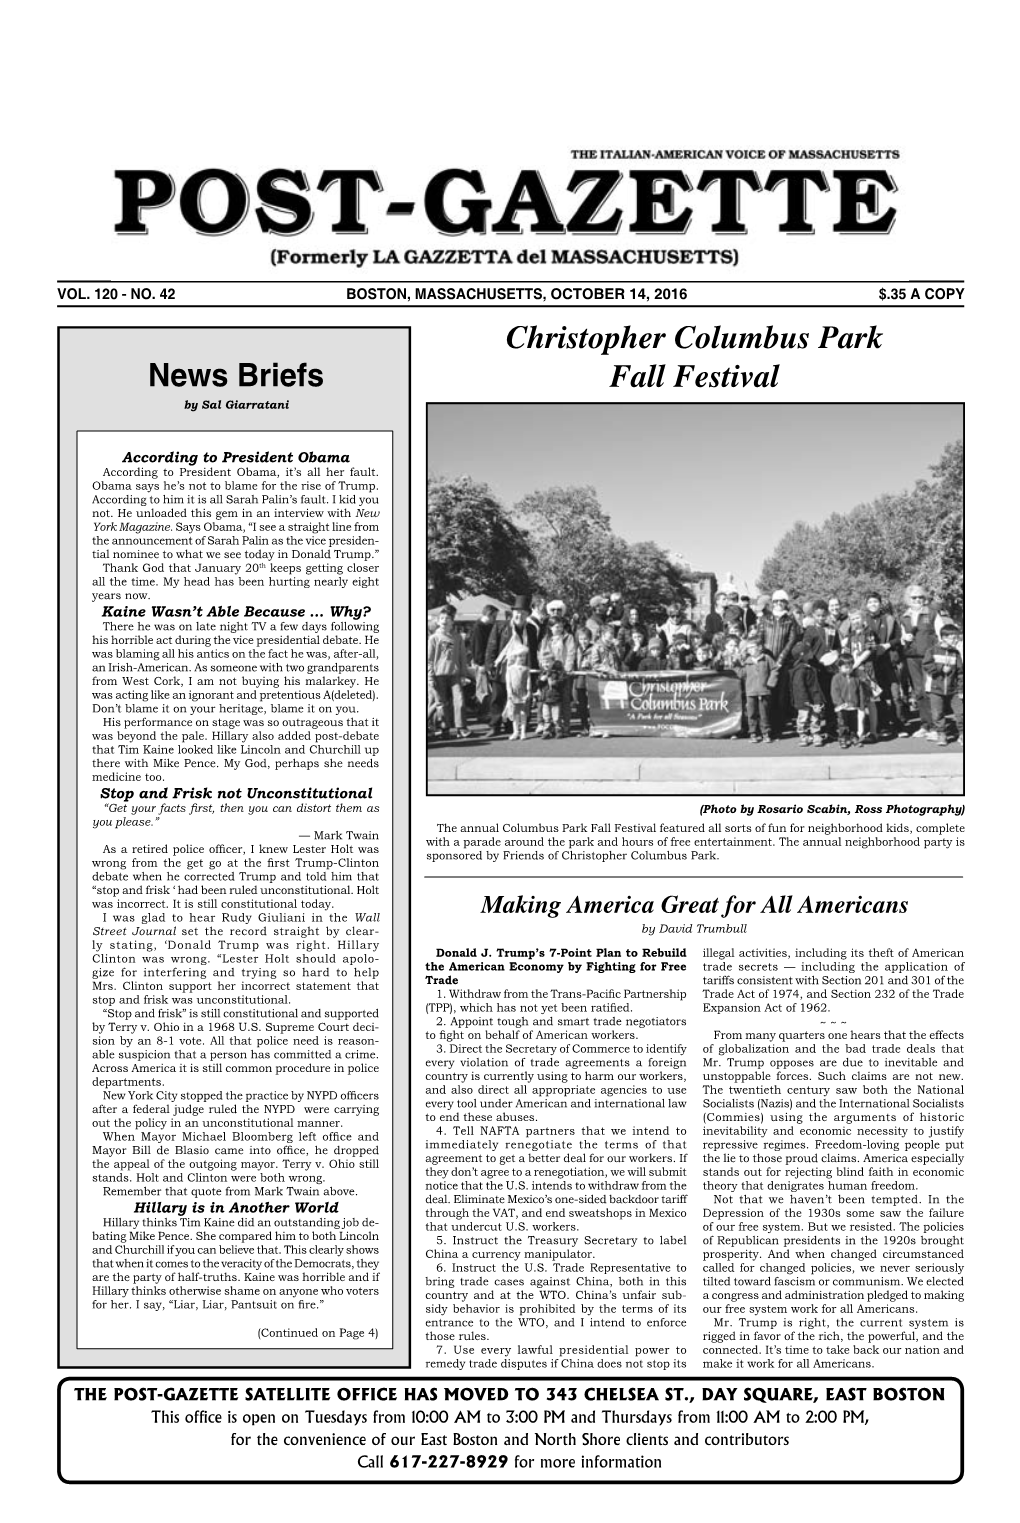 News Briefs Christopher Columbus Park Fall Festival